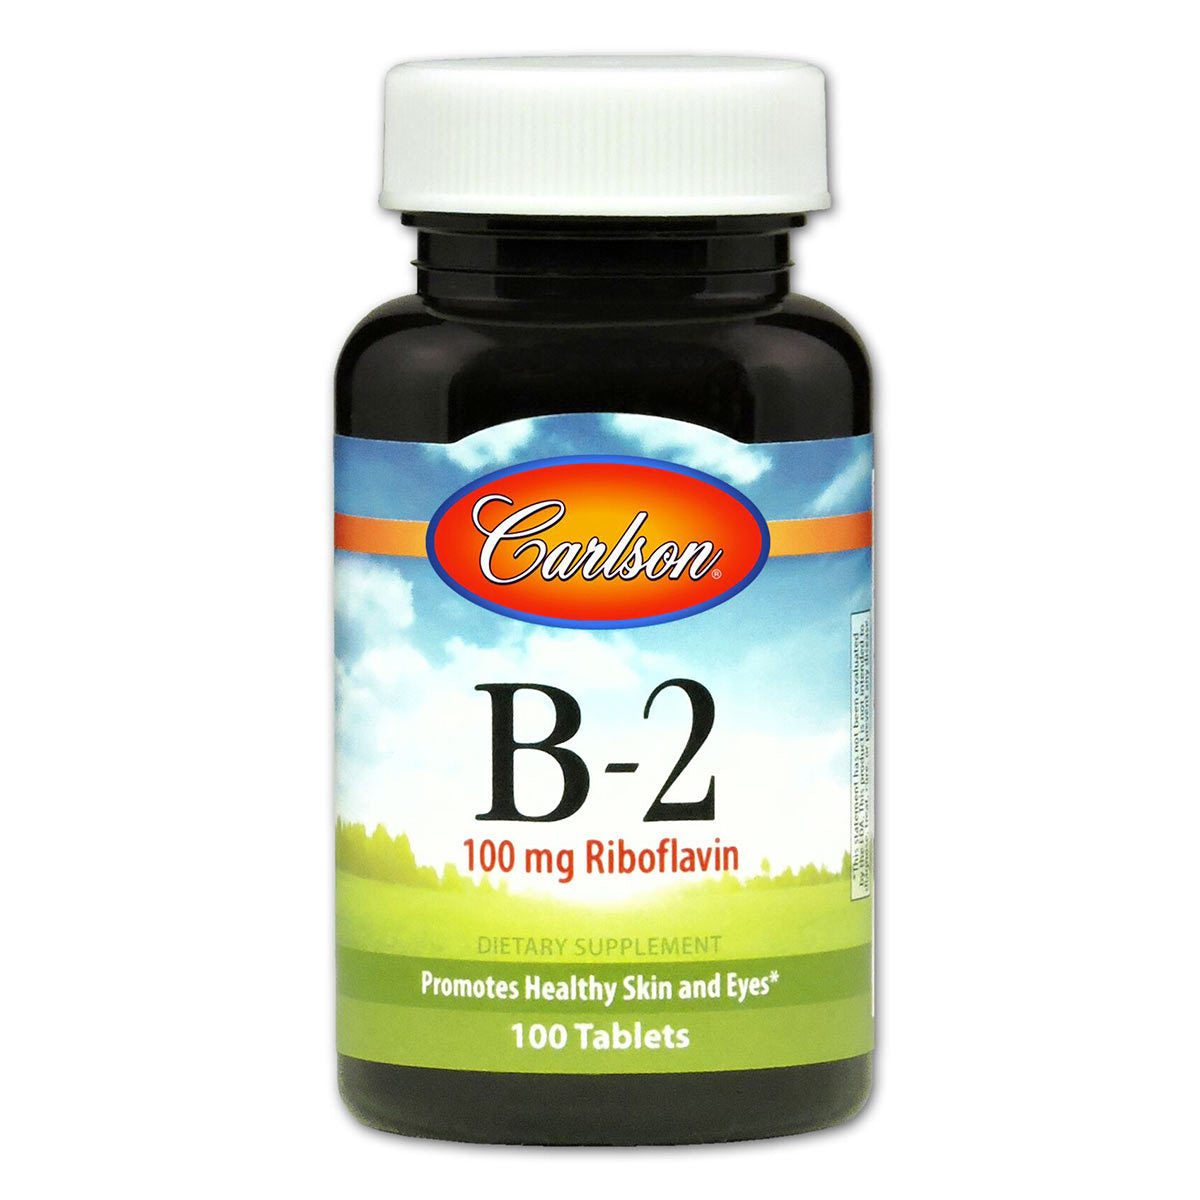 Primary image of Vitamin B2